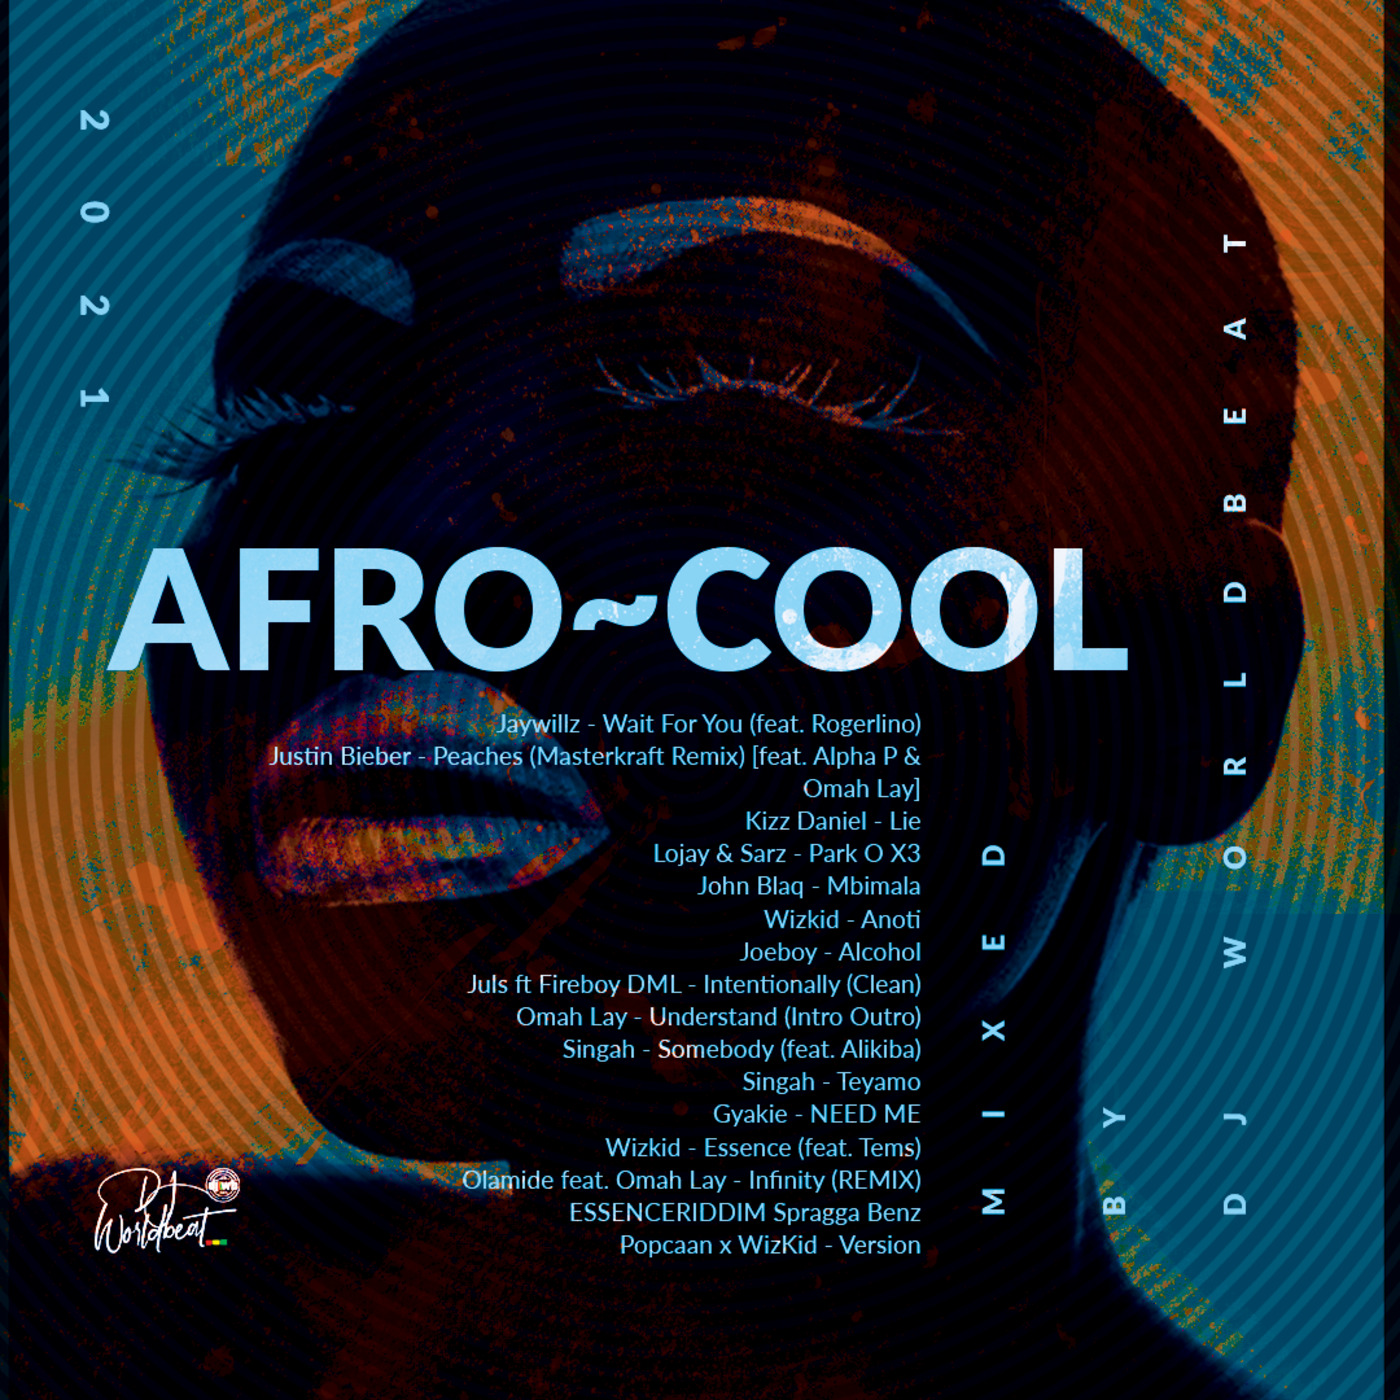 AfroCool 2021